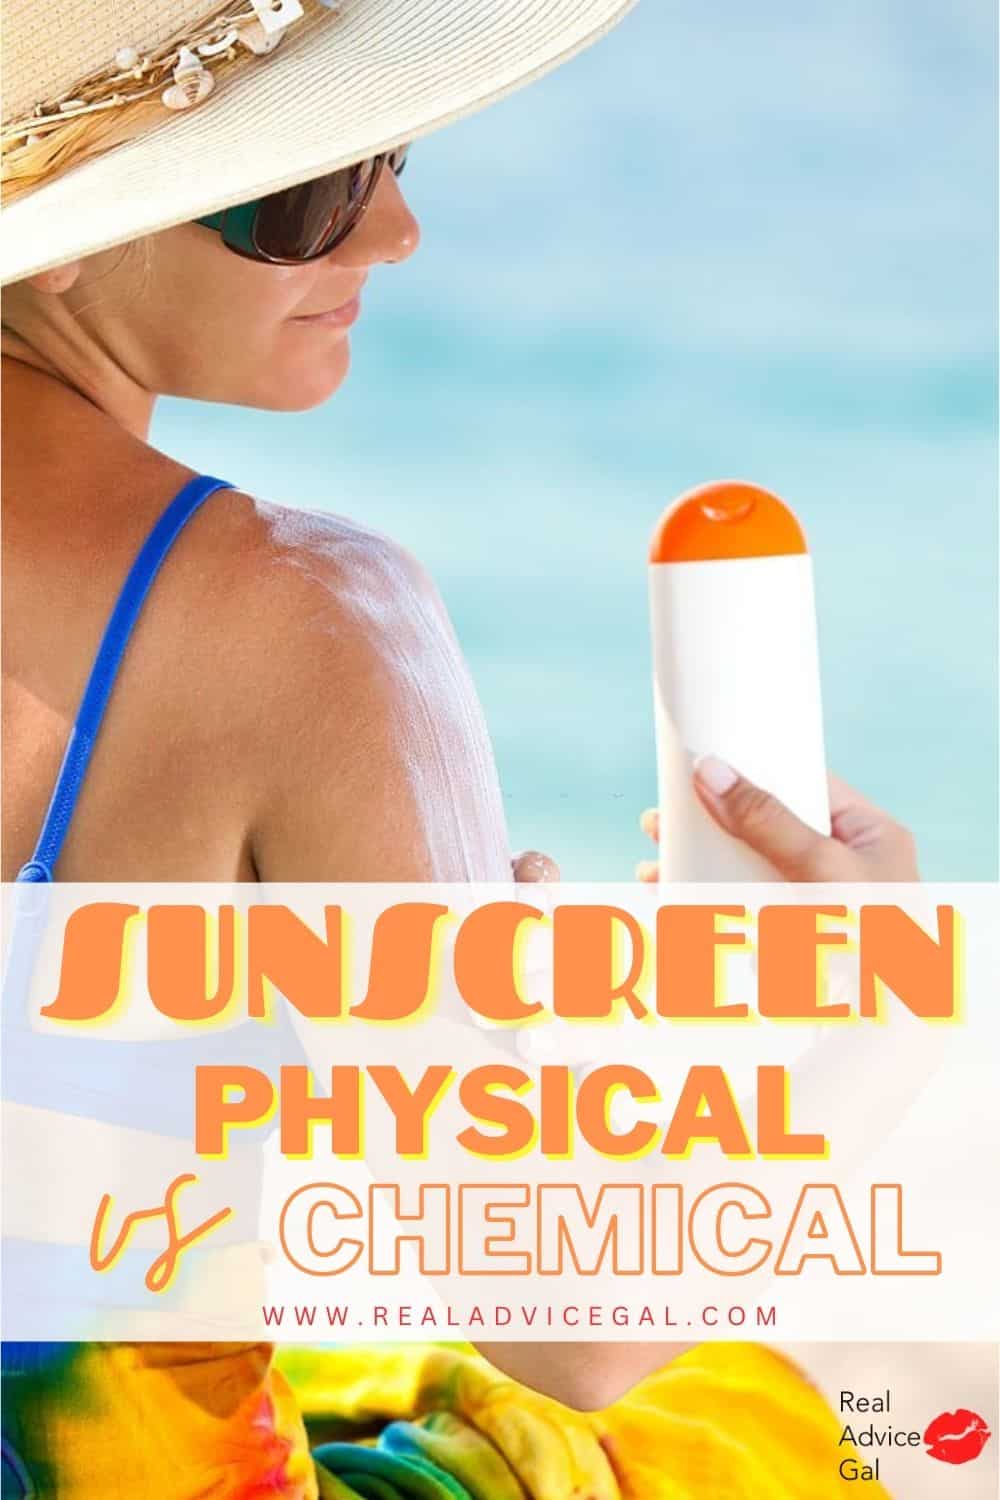 Physical Sunscreen vs Chemical Sunscreen